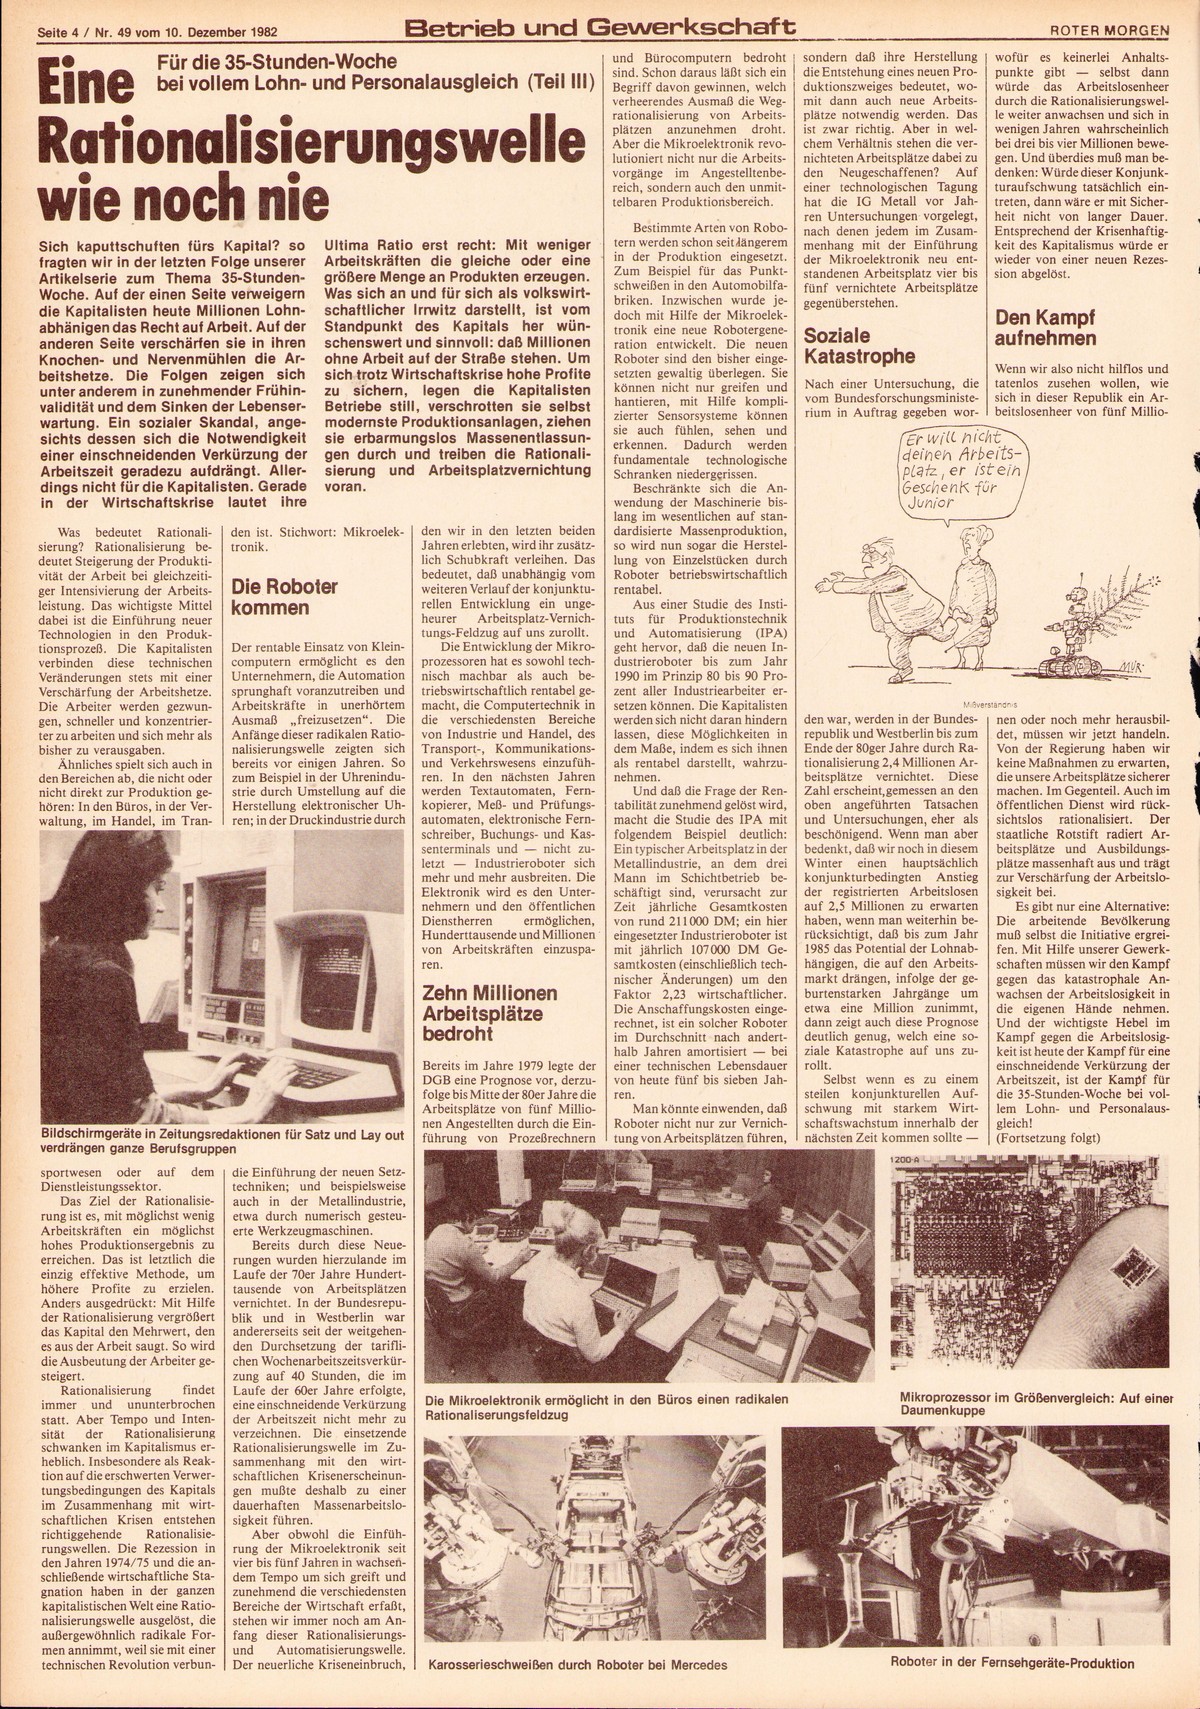 Roter Morgen, 16. Jg., 10. Dezember 1982, Nr. 49, Seite 4